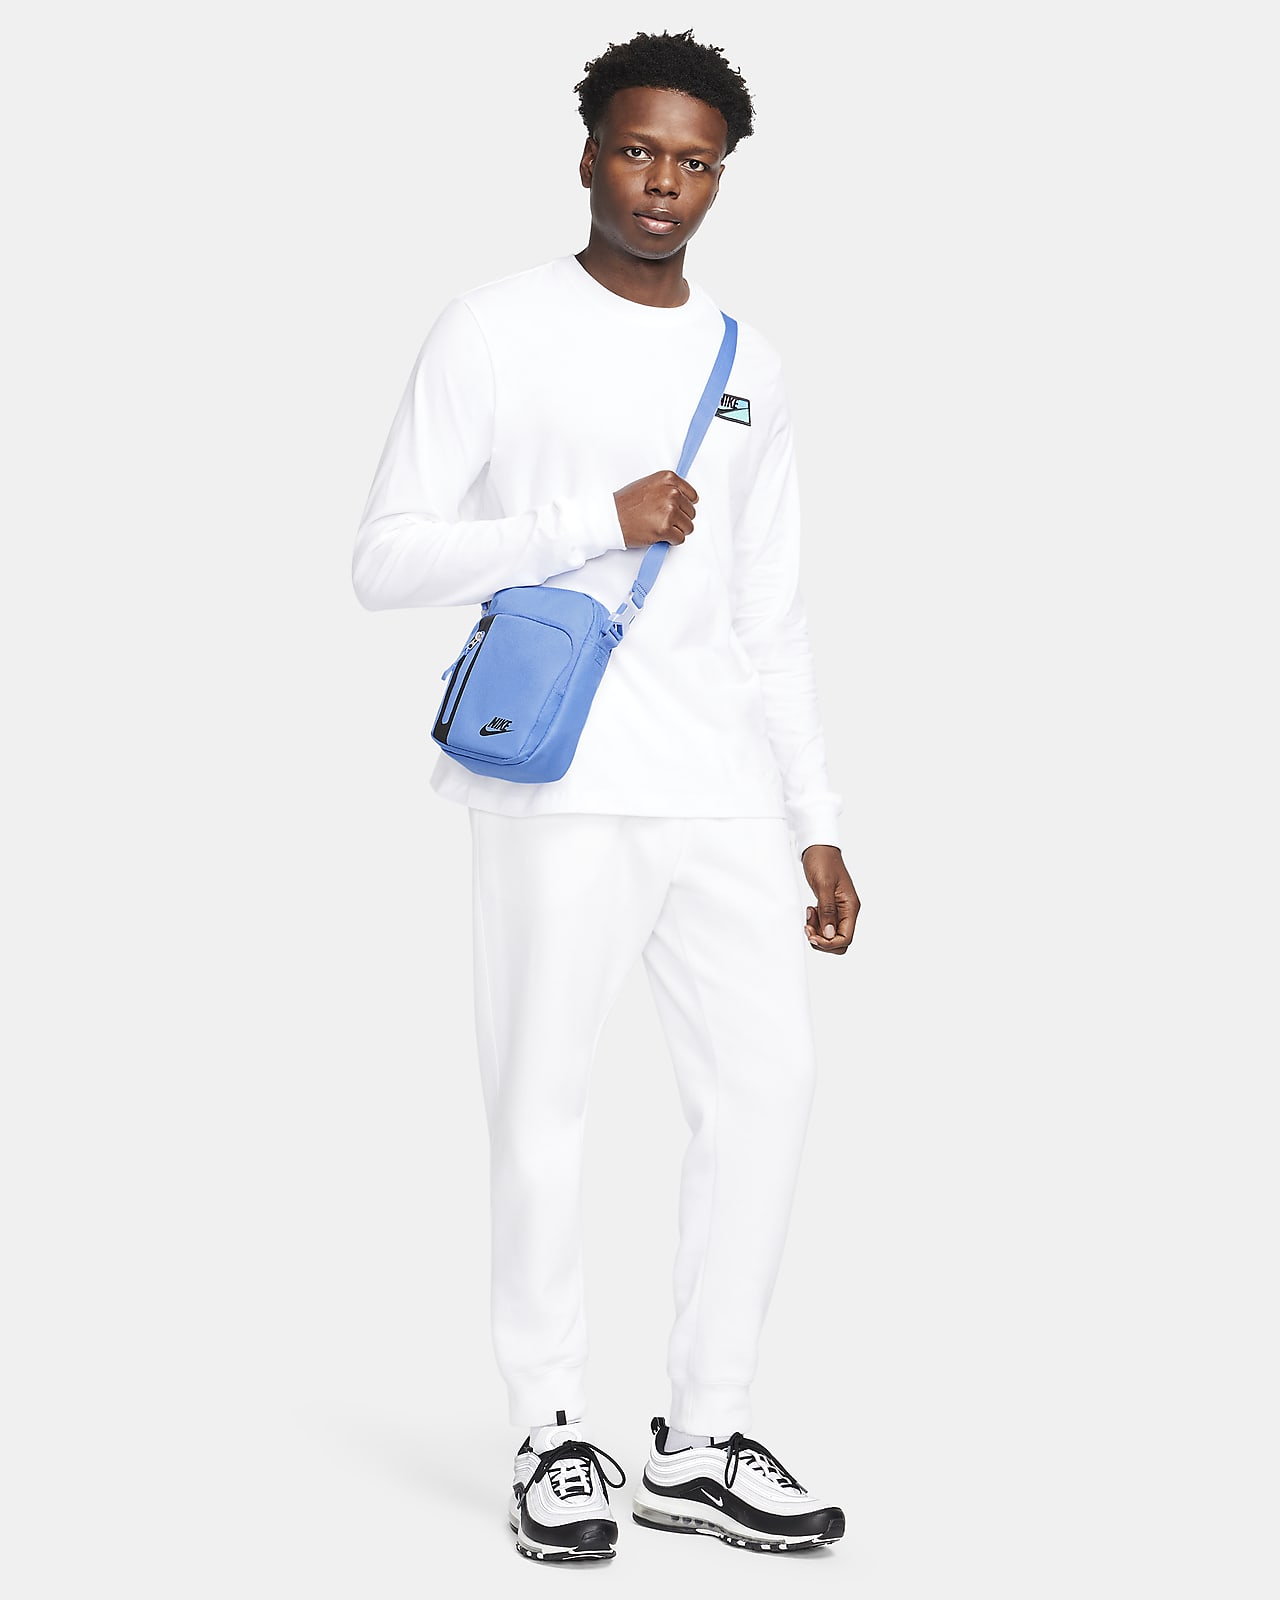 Nike Nike Elemental Premium Crossbody Bag 